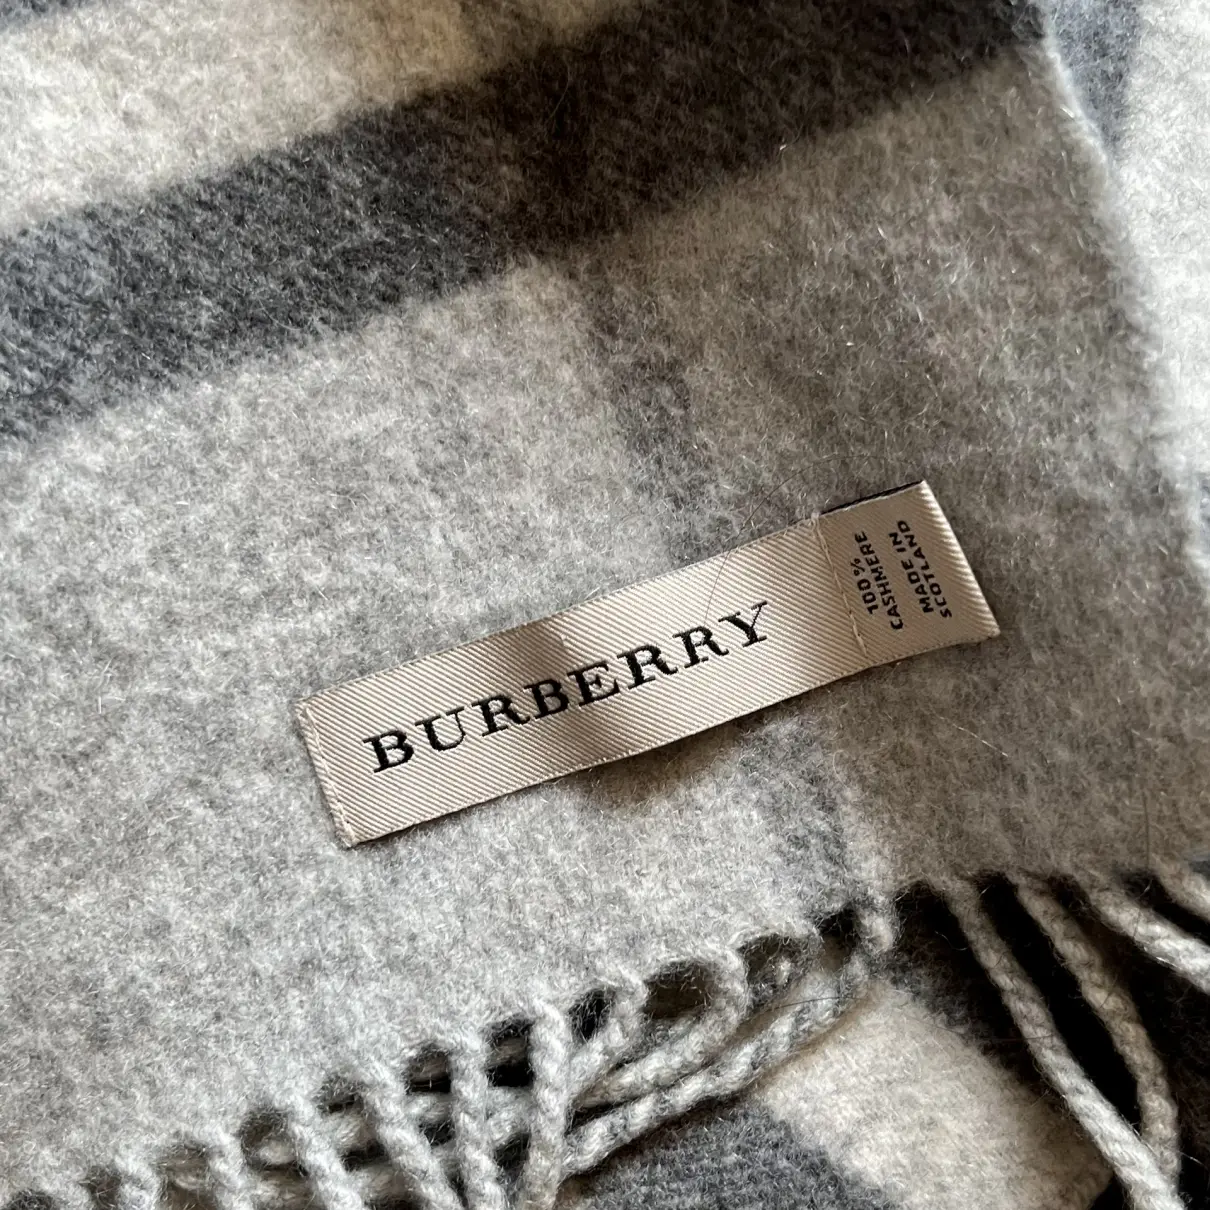 Luxury Burberry Scarves Women